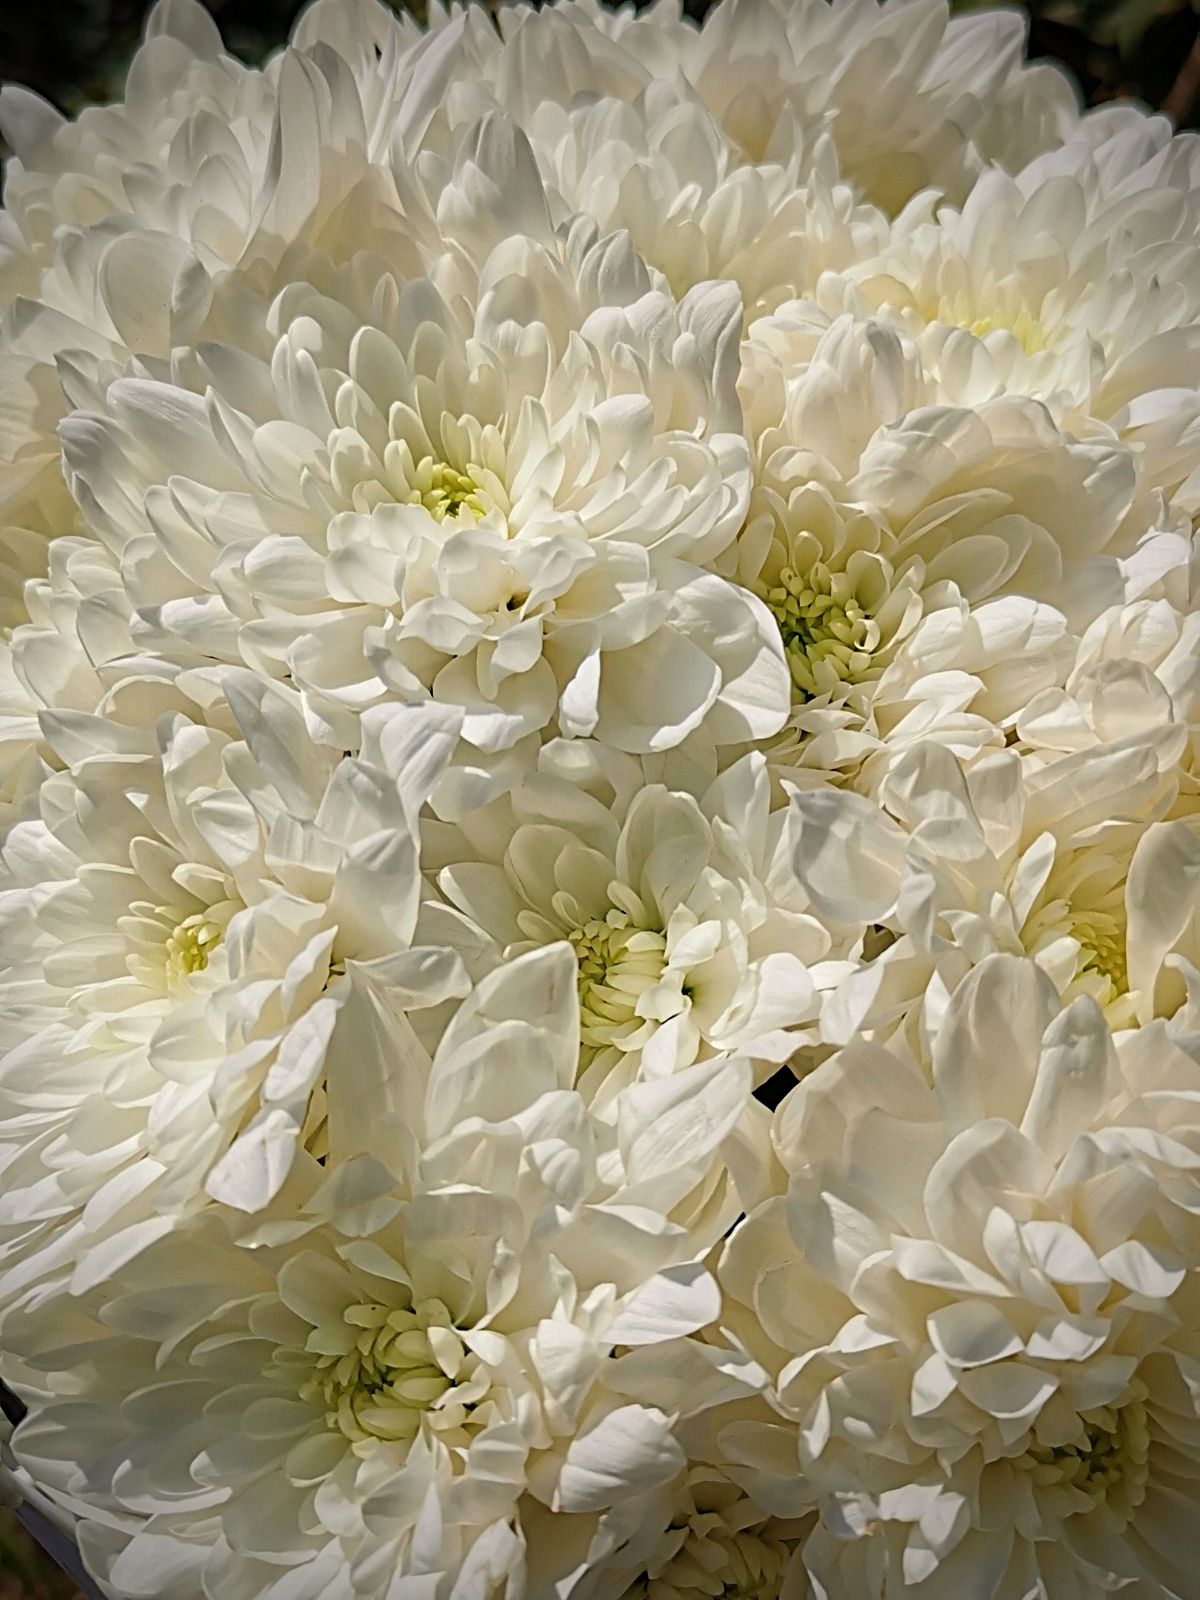 Sarah Willemart with Pina Colada White Chrysanthemum - on Thursd 03